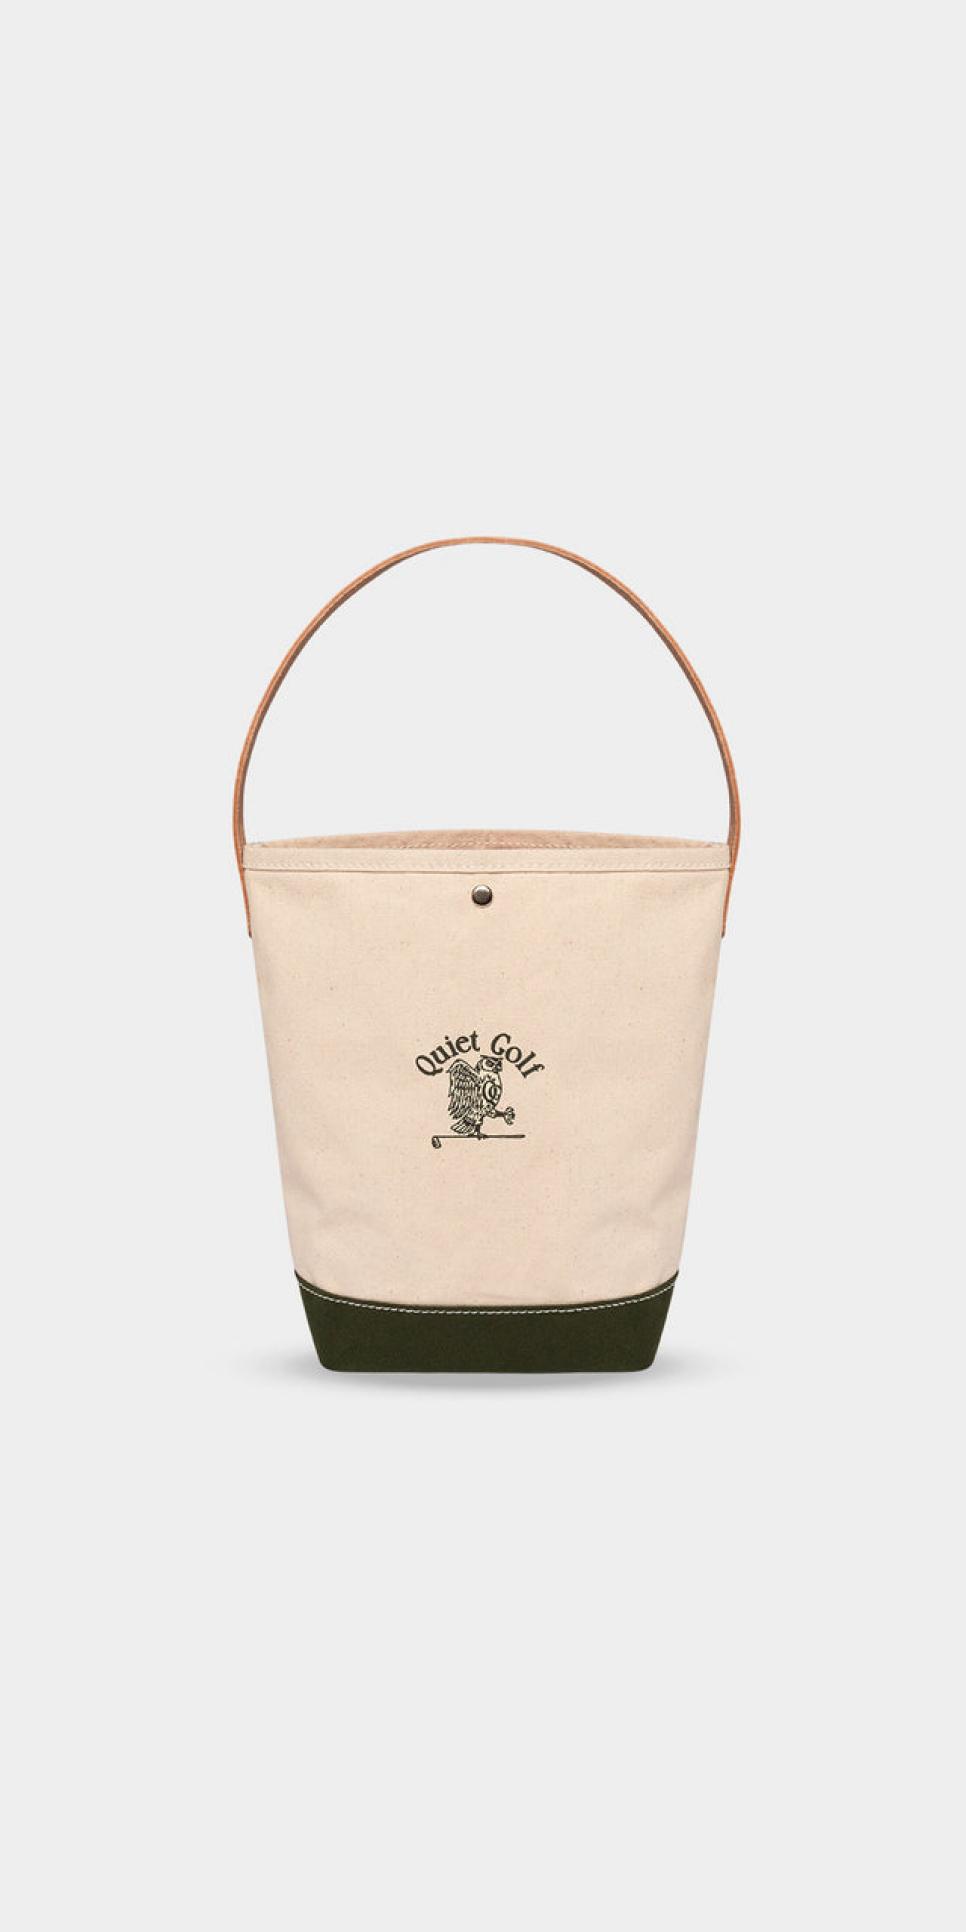 rx-quietgolfquiet-golf-crest-bucket-bag.jpeg